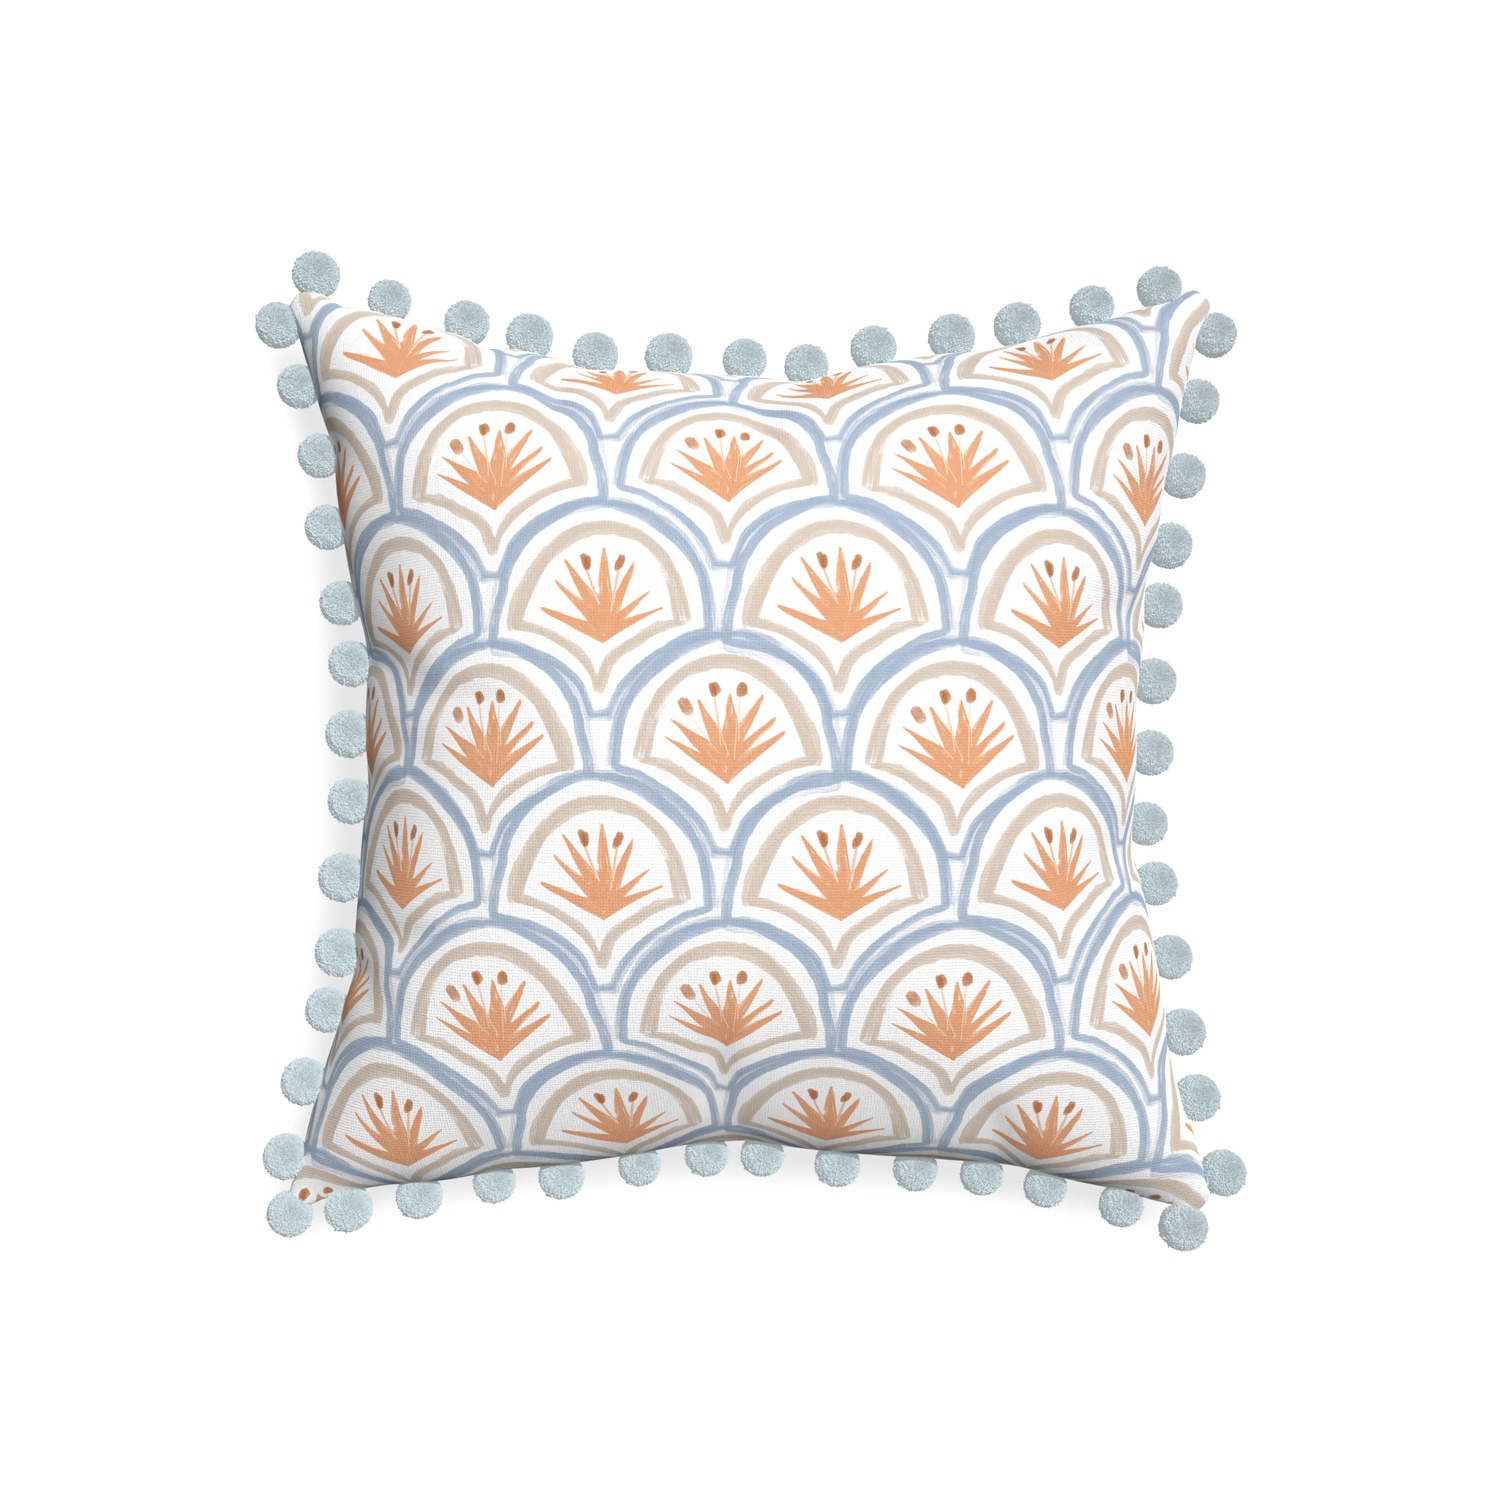 20-square thatcher apricot custom art deco palm patternpillow with powder pom pom on white background